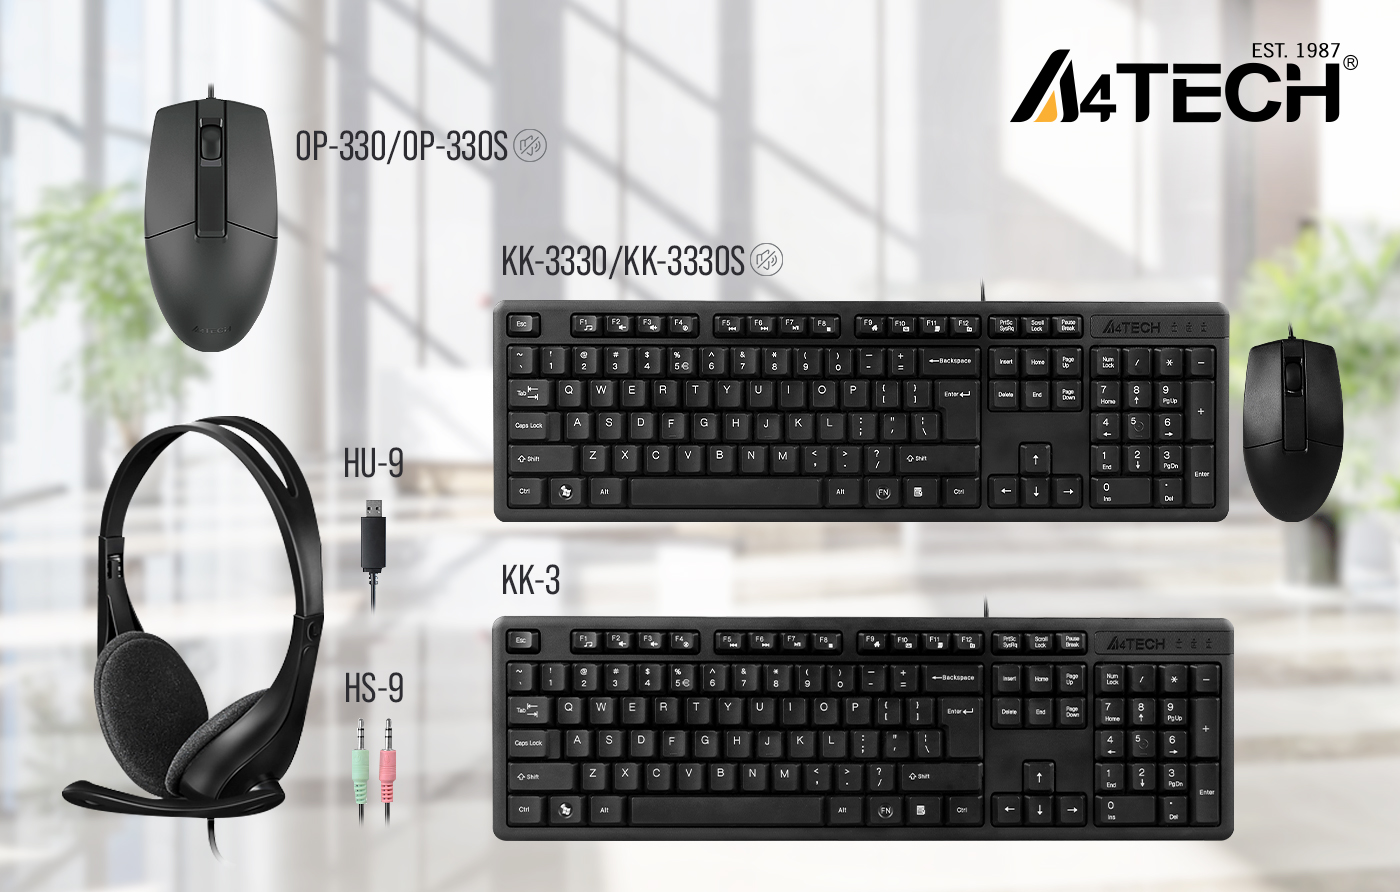 A4tech KK-3330s. Keyboard a4 Tech wired Combo KK-3+op-330. Мышь a4tech KK-3330s. A4tech KK-3330 (KK-3+op-330). Kk 3330s